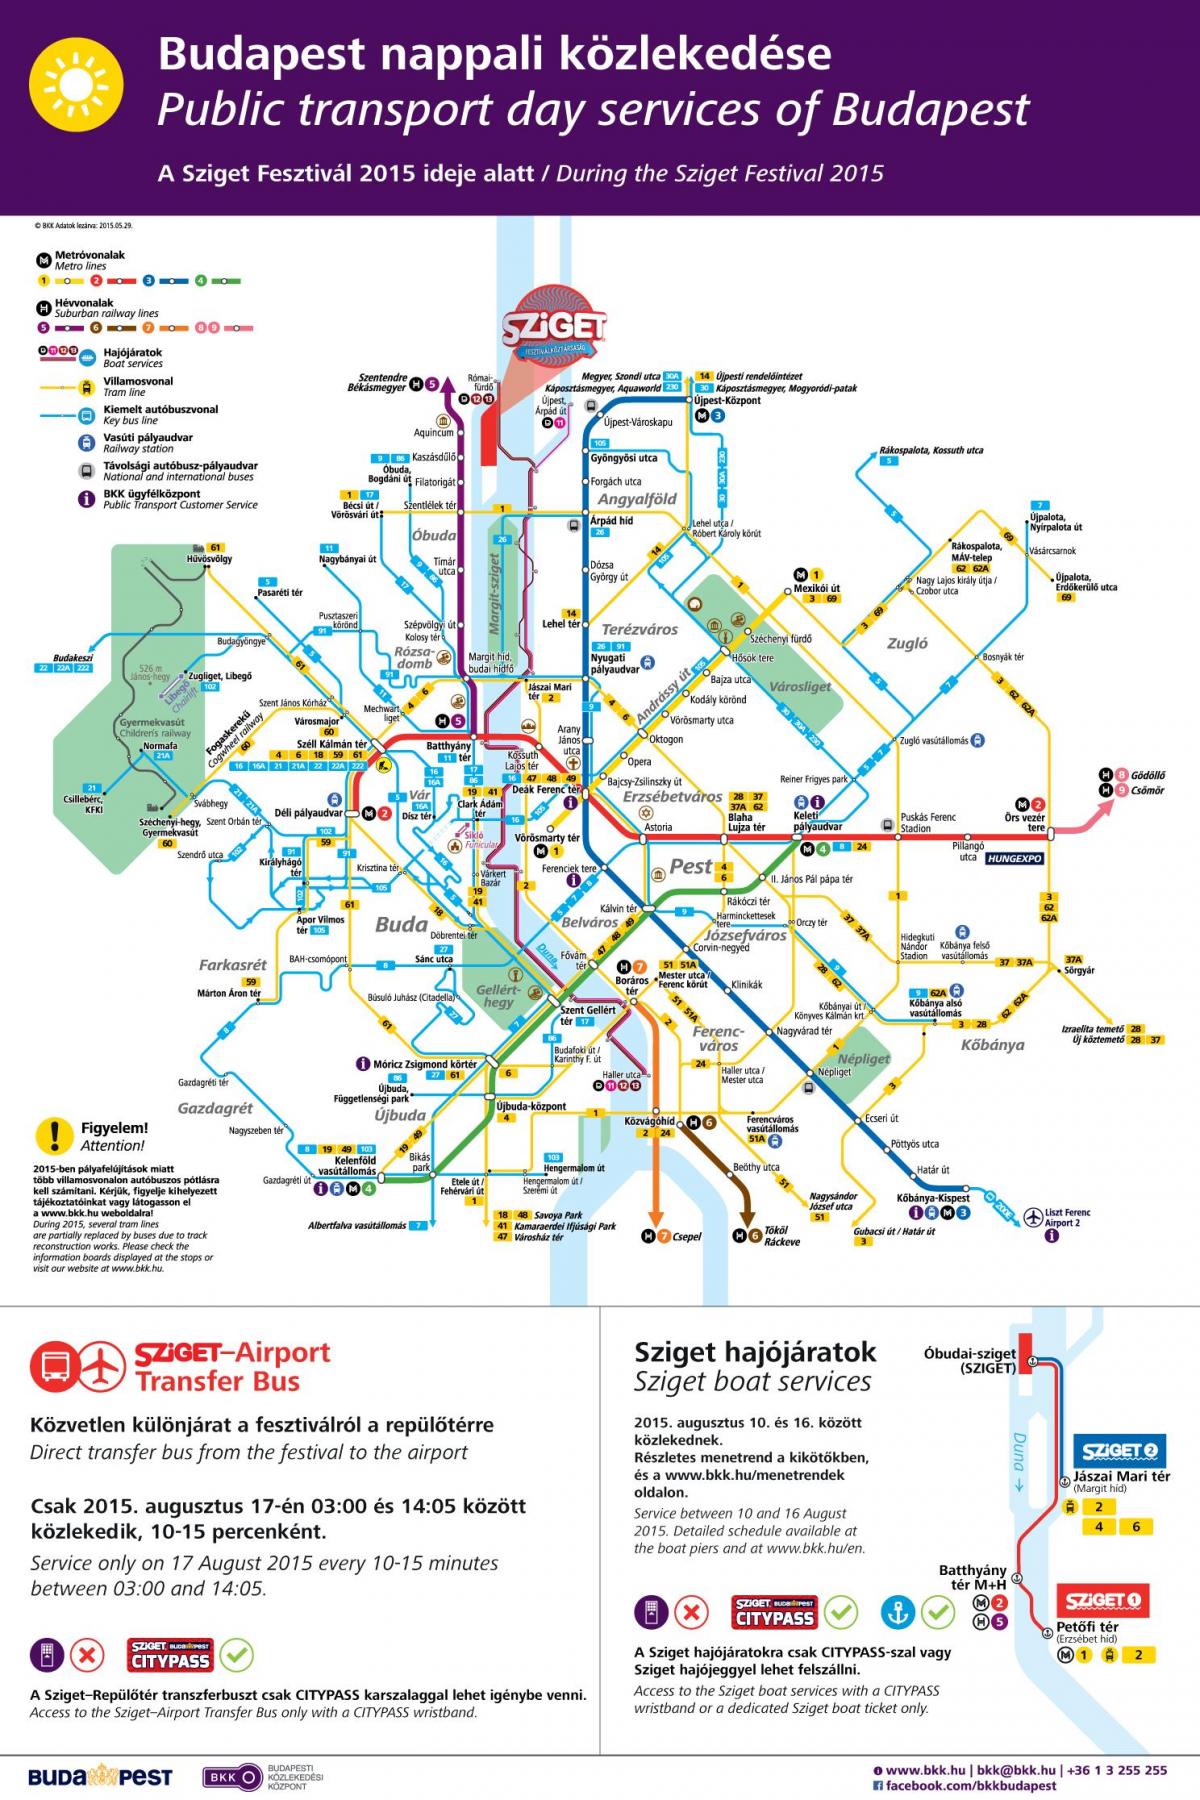 budapest streetcar map